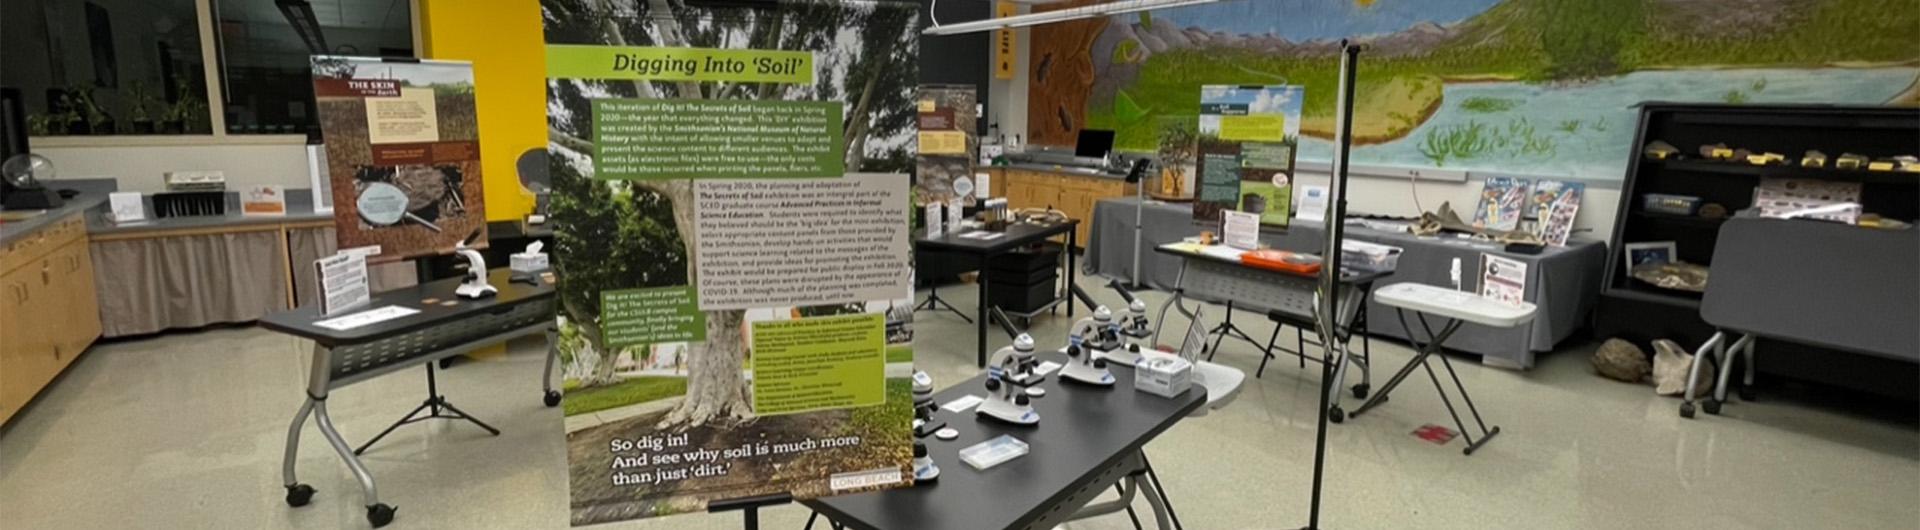 Science Learning Center soil exhibit